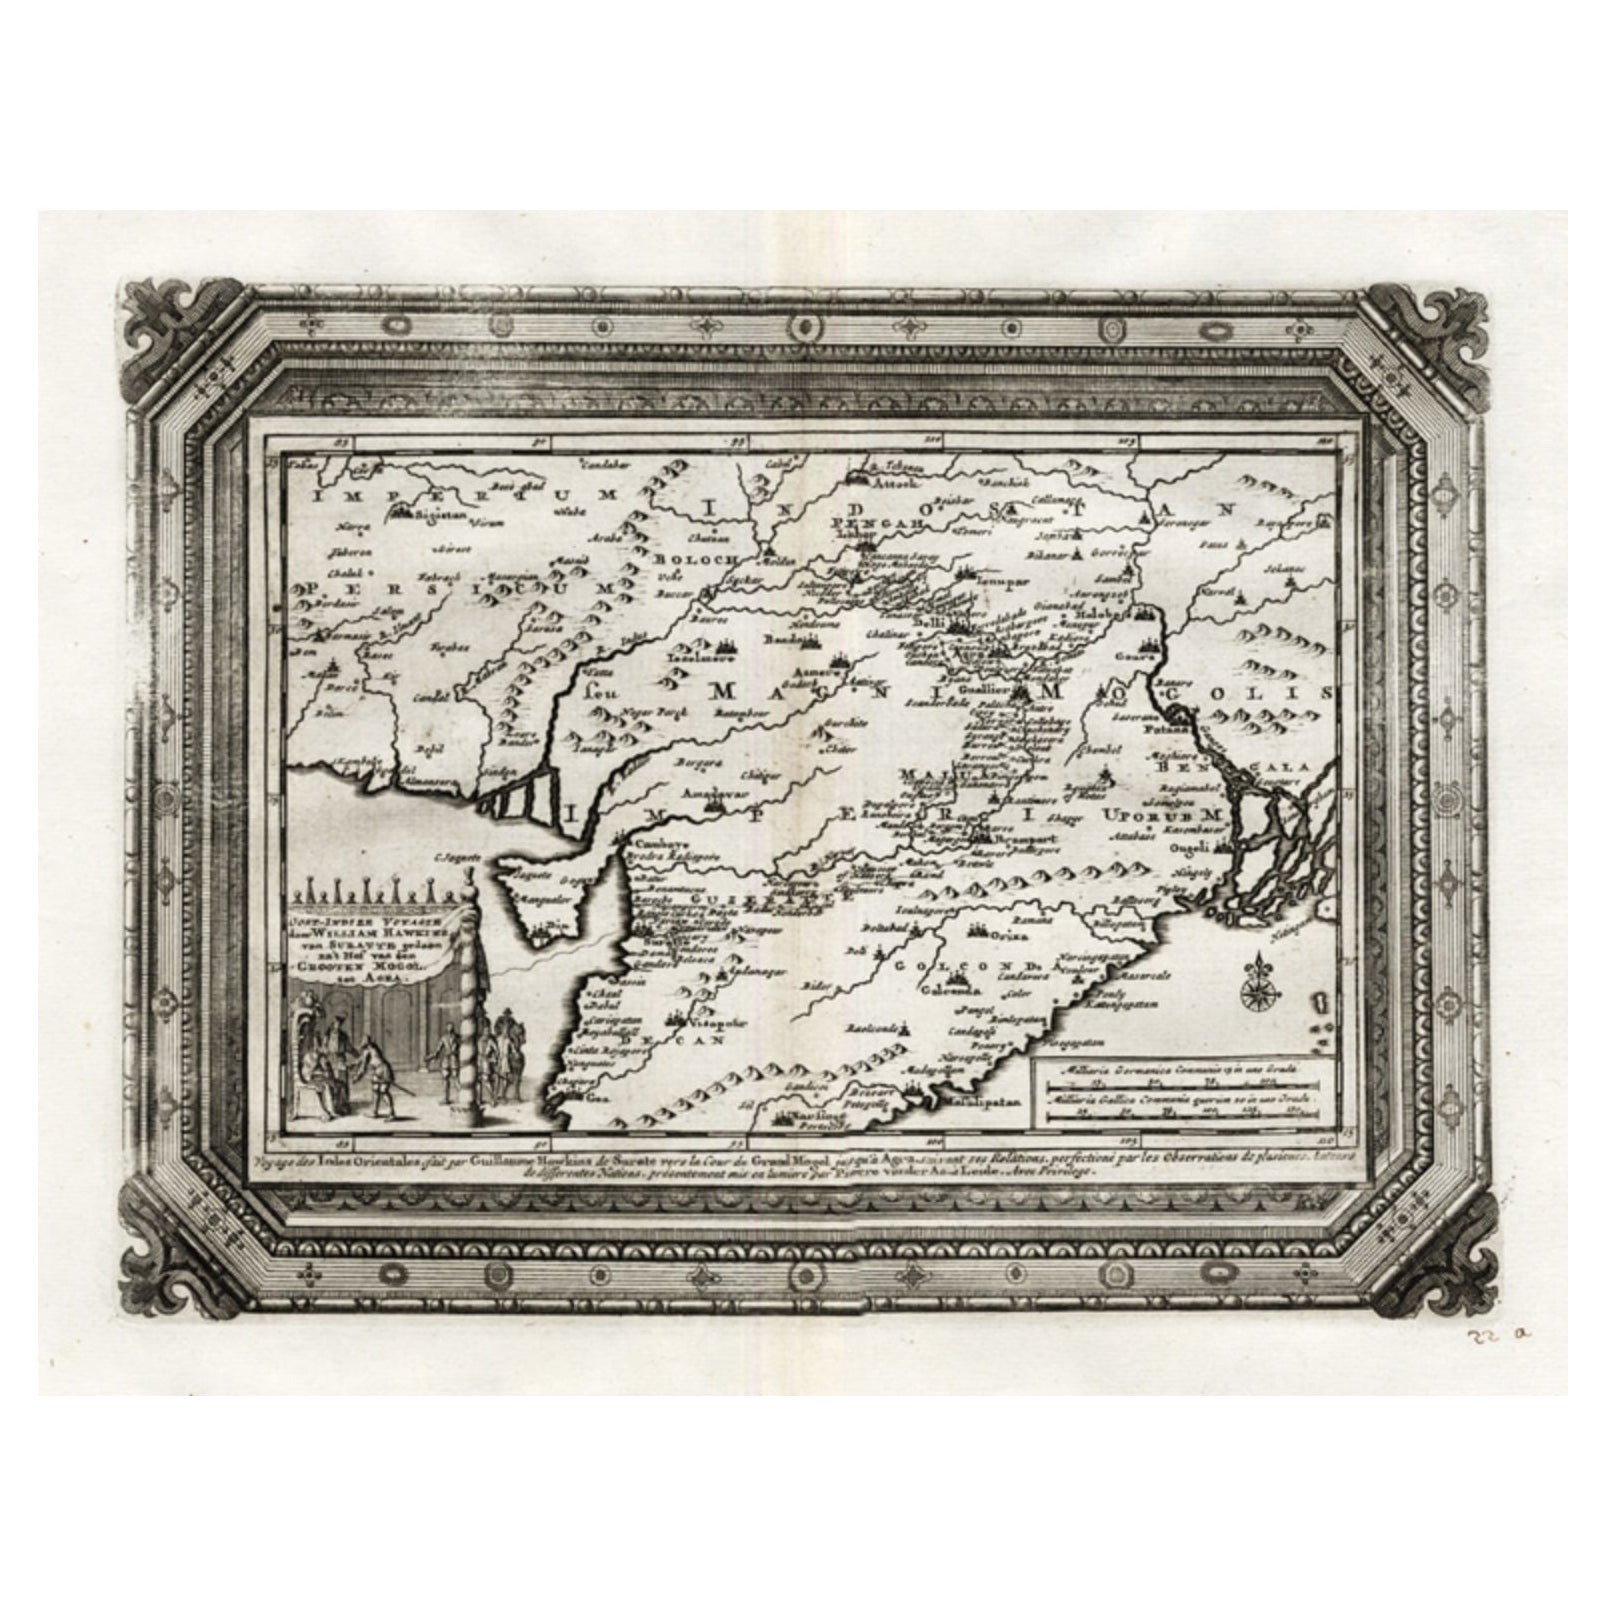 Rare carte ancienne de l'Empire moghol, vers 1725